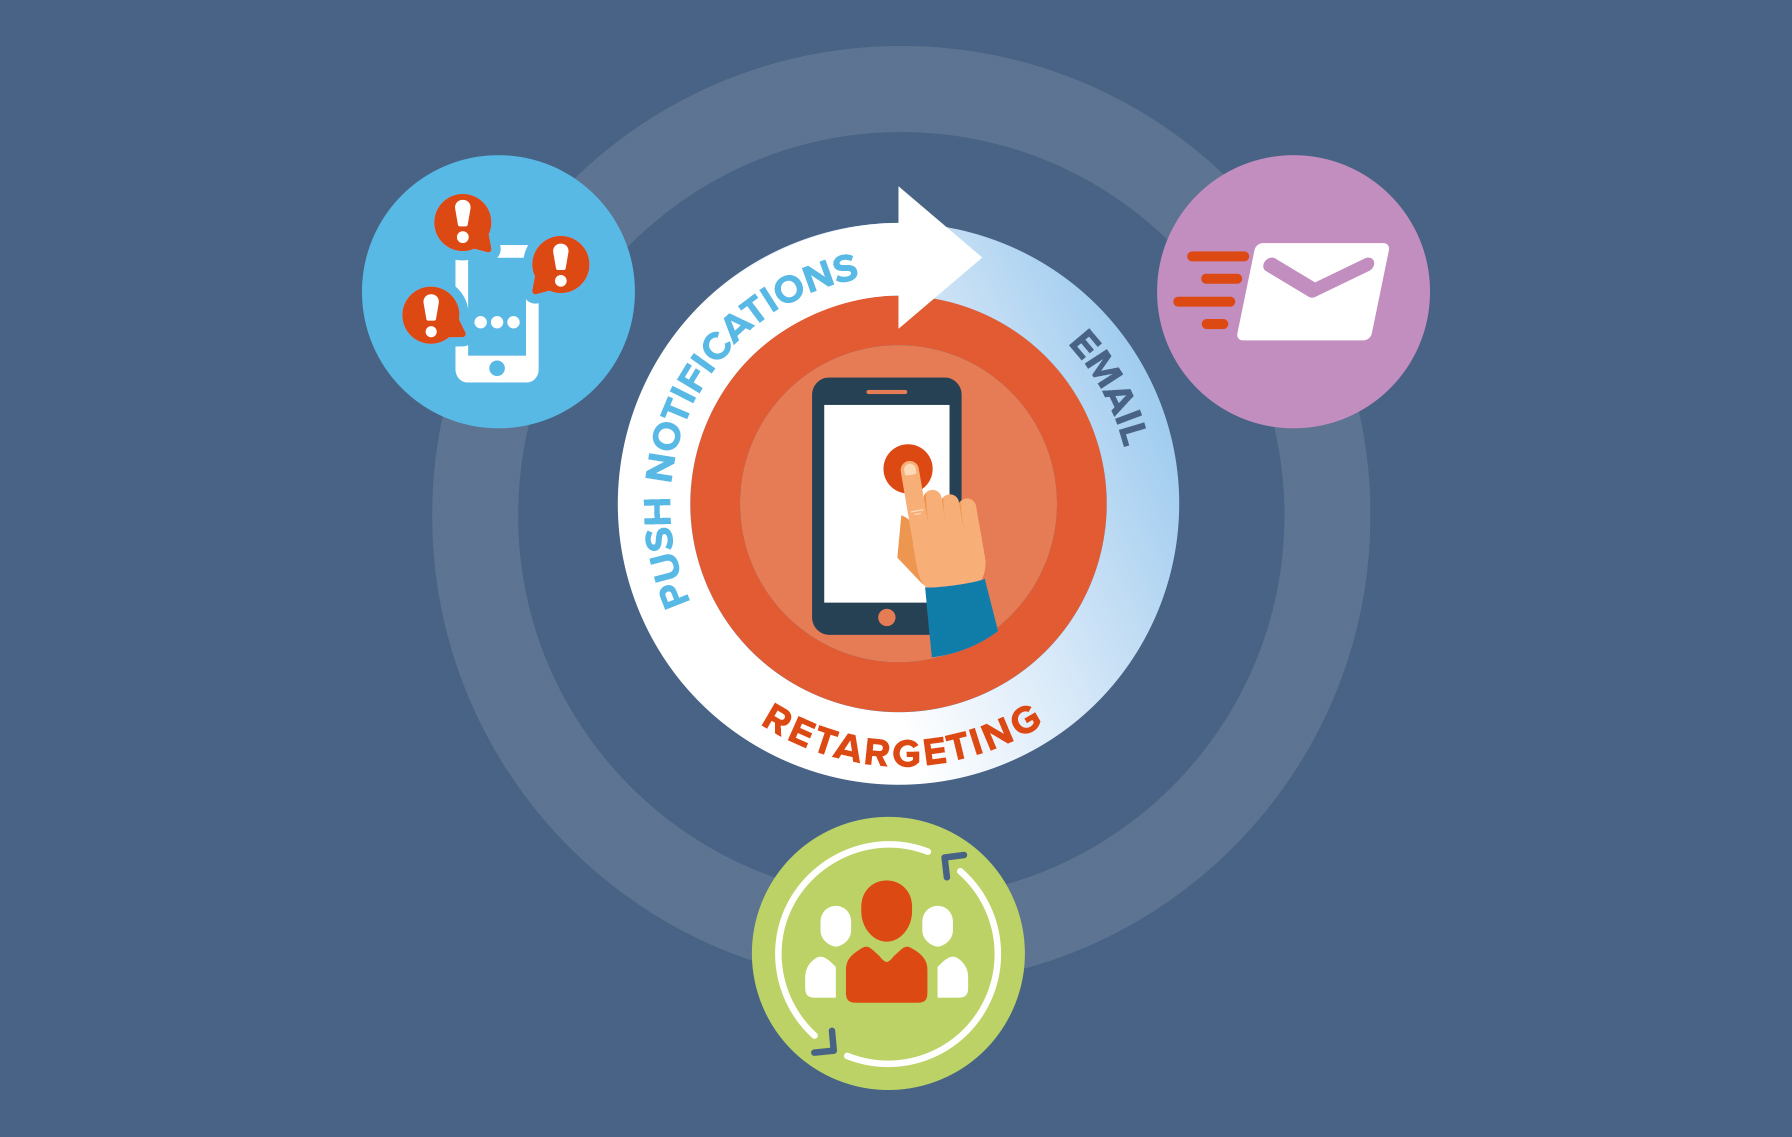 Retention Marketing: Building Mobile App Value Through Smart Targeting